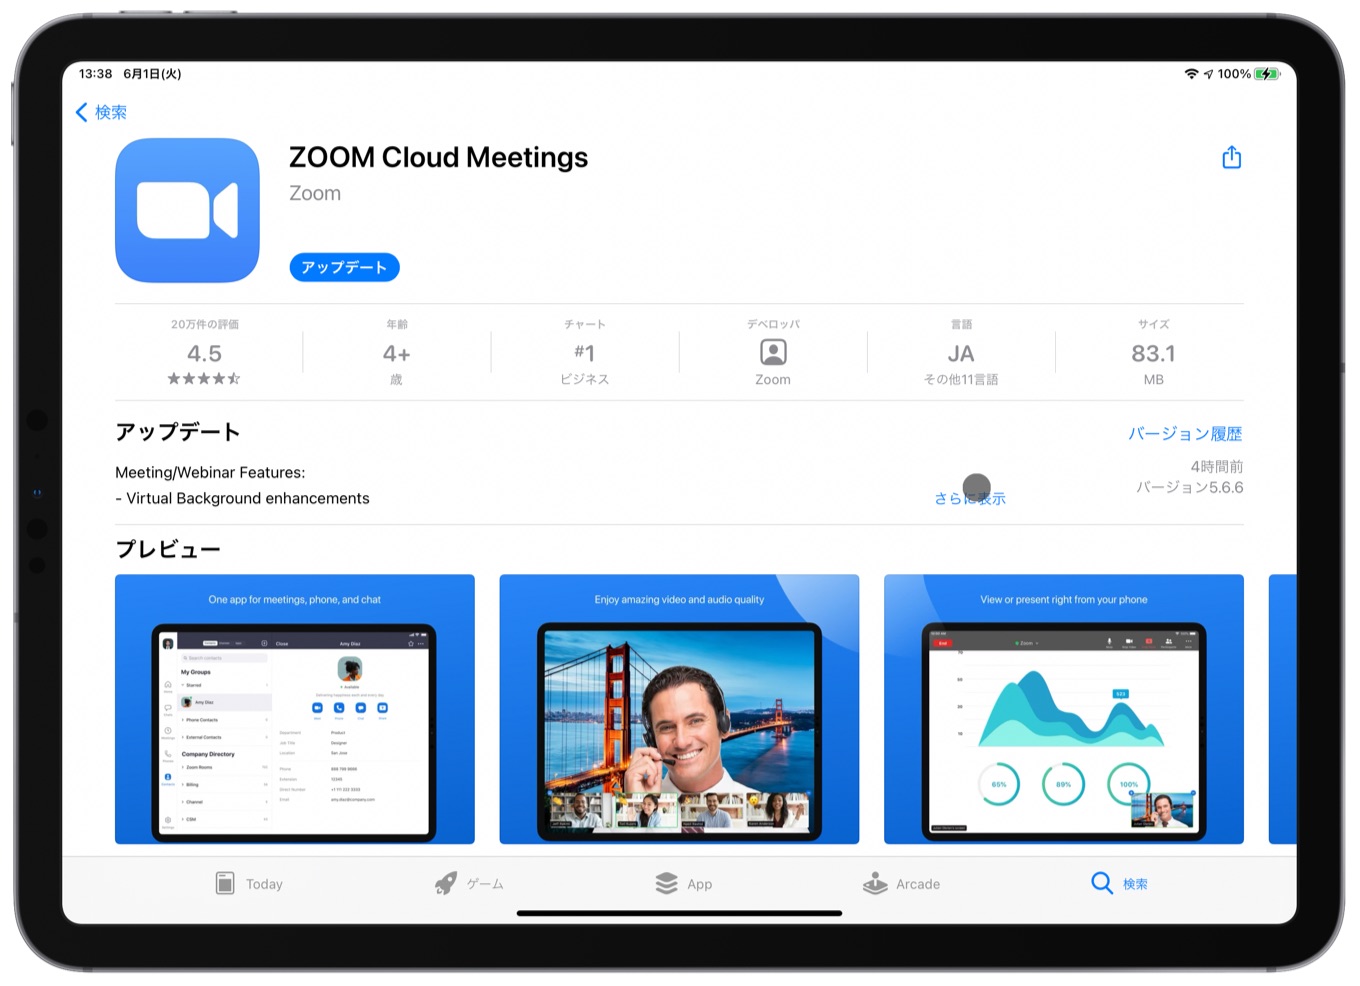 ZOOM Cloud Meetings v566 for iPad